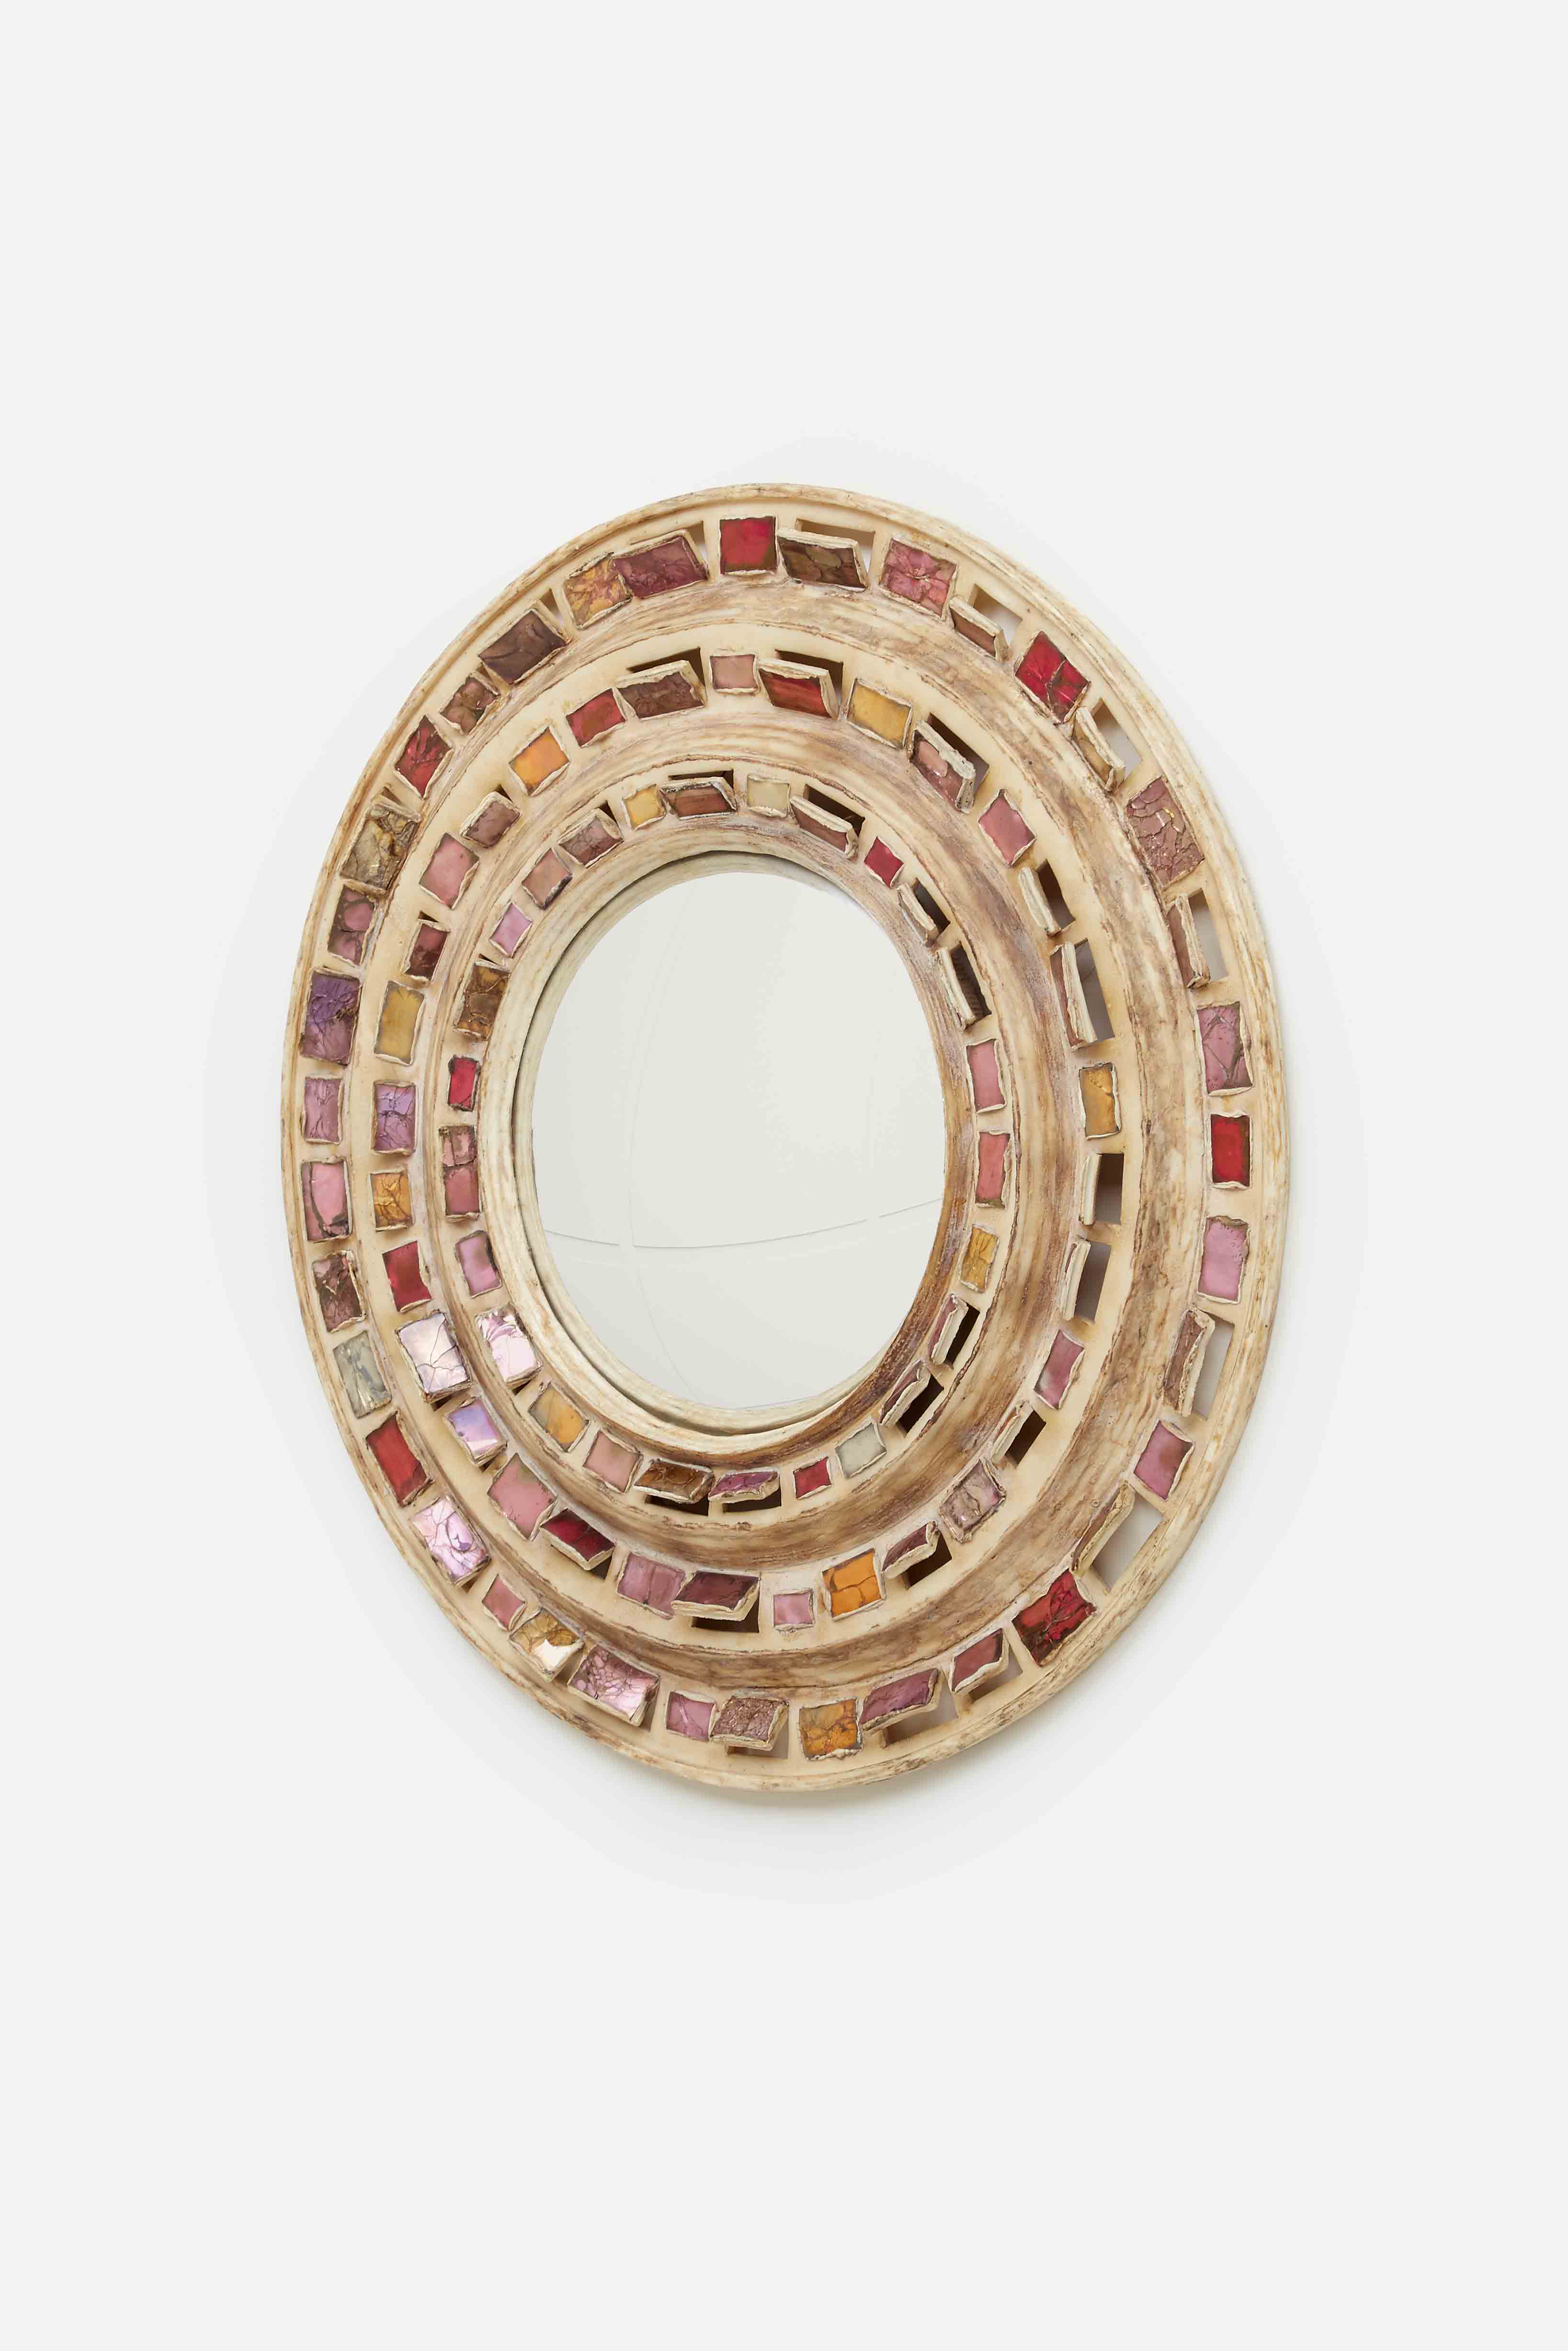 Line Vautrin, ‘Roue’ mirror, vue 01